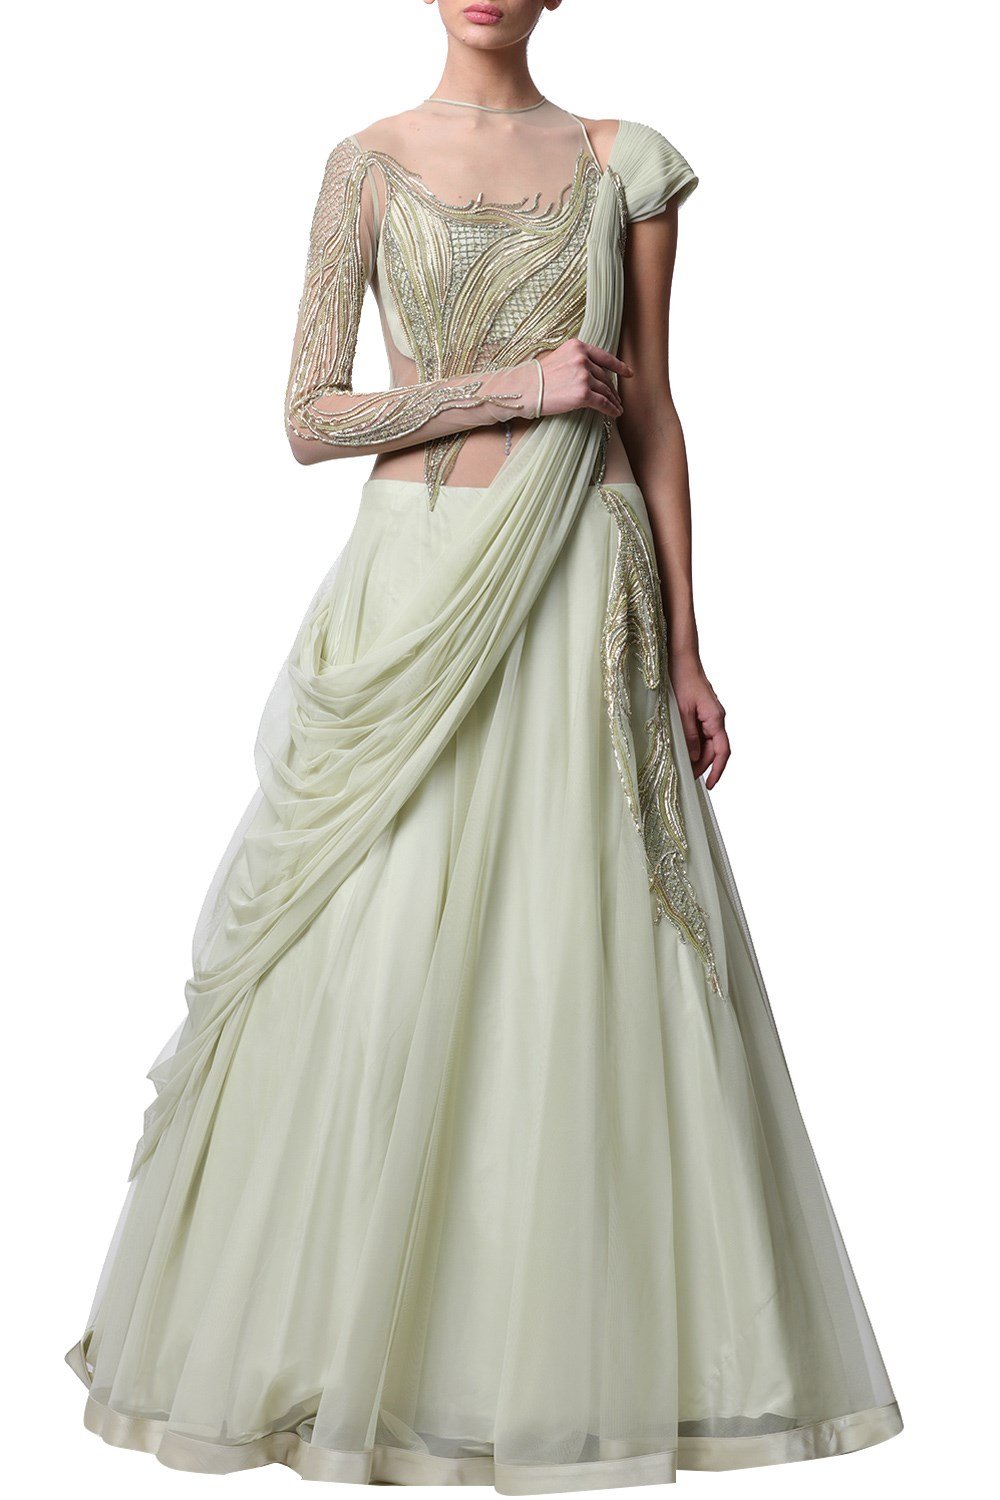 saree gown online low price